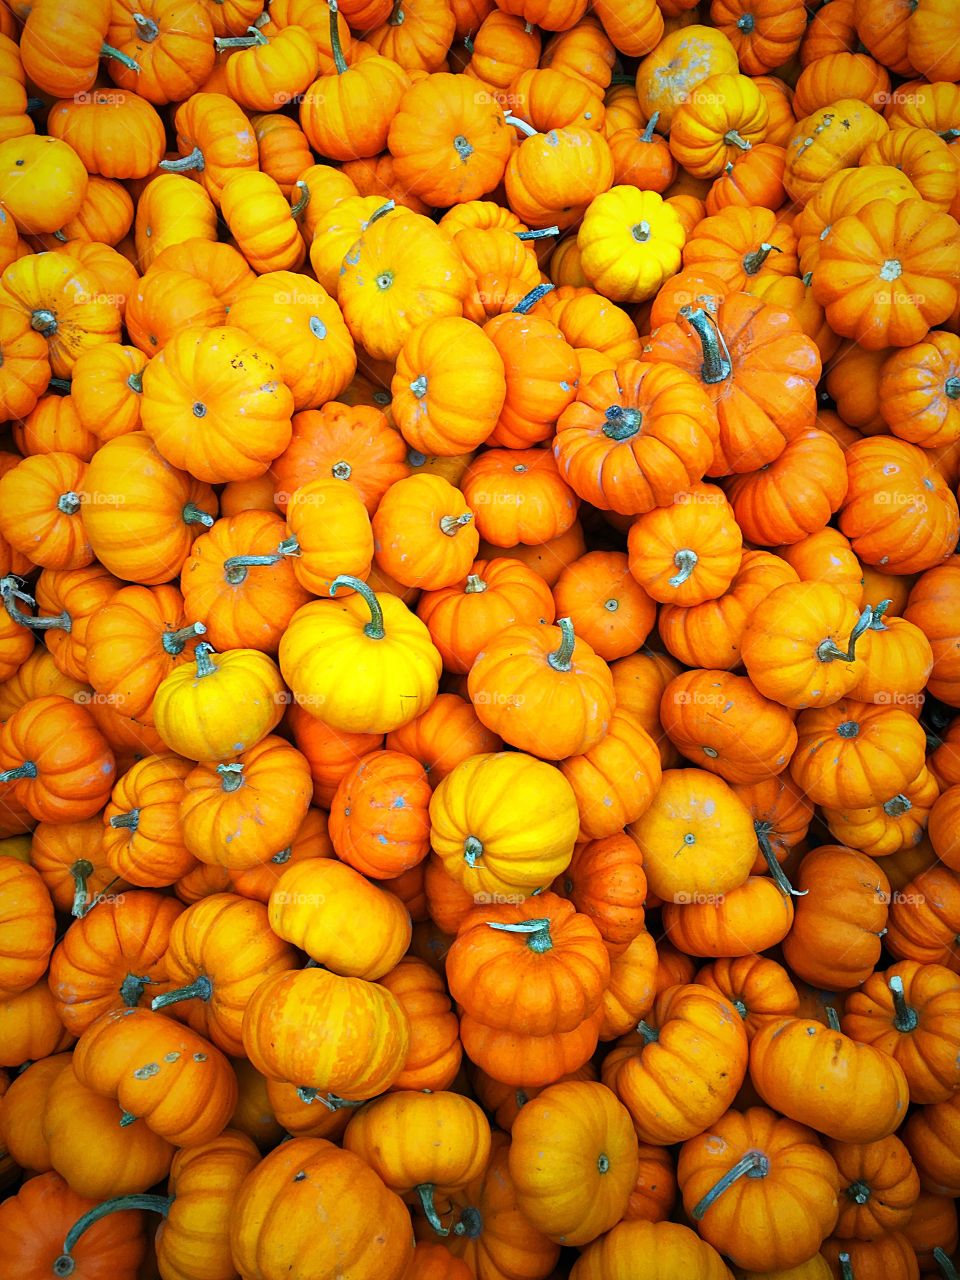 A lot of small pumpkins arranged together 